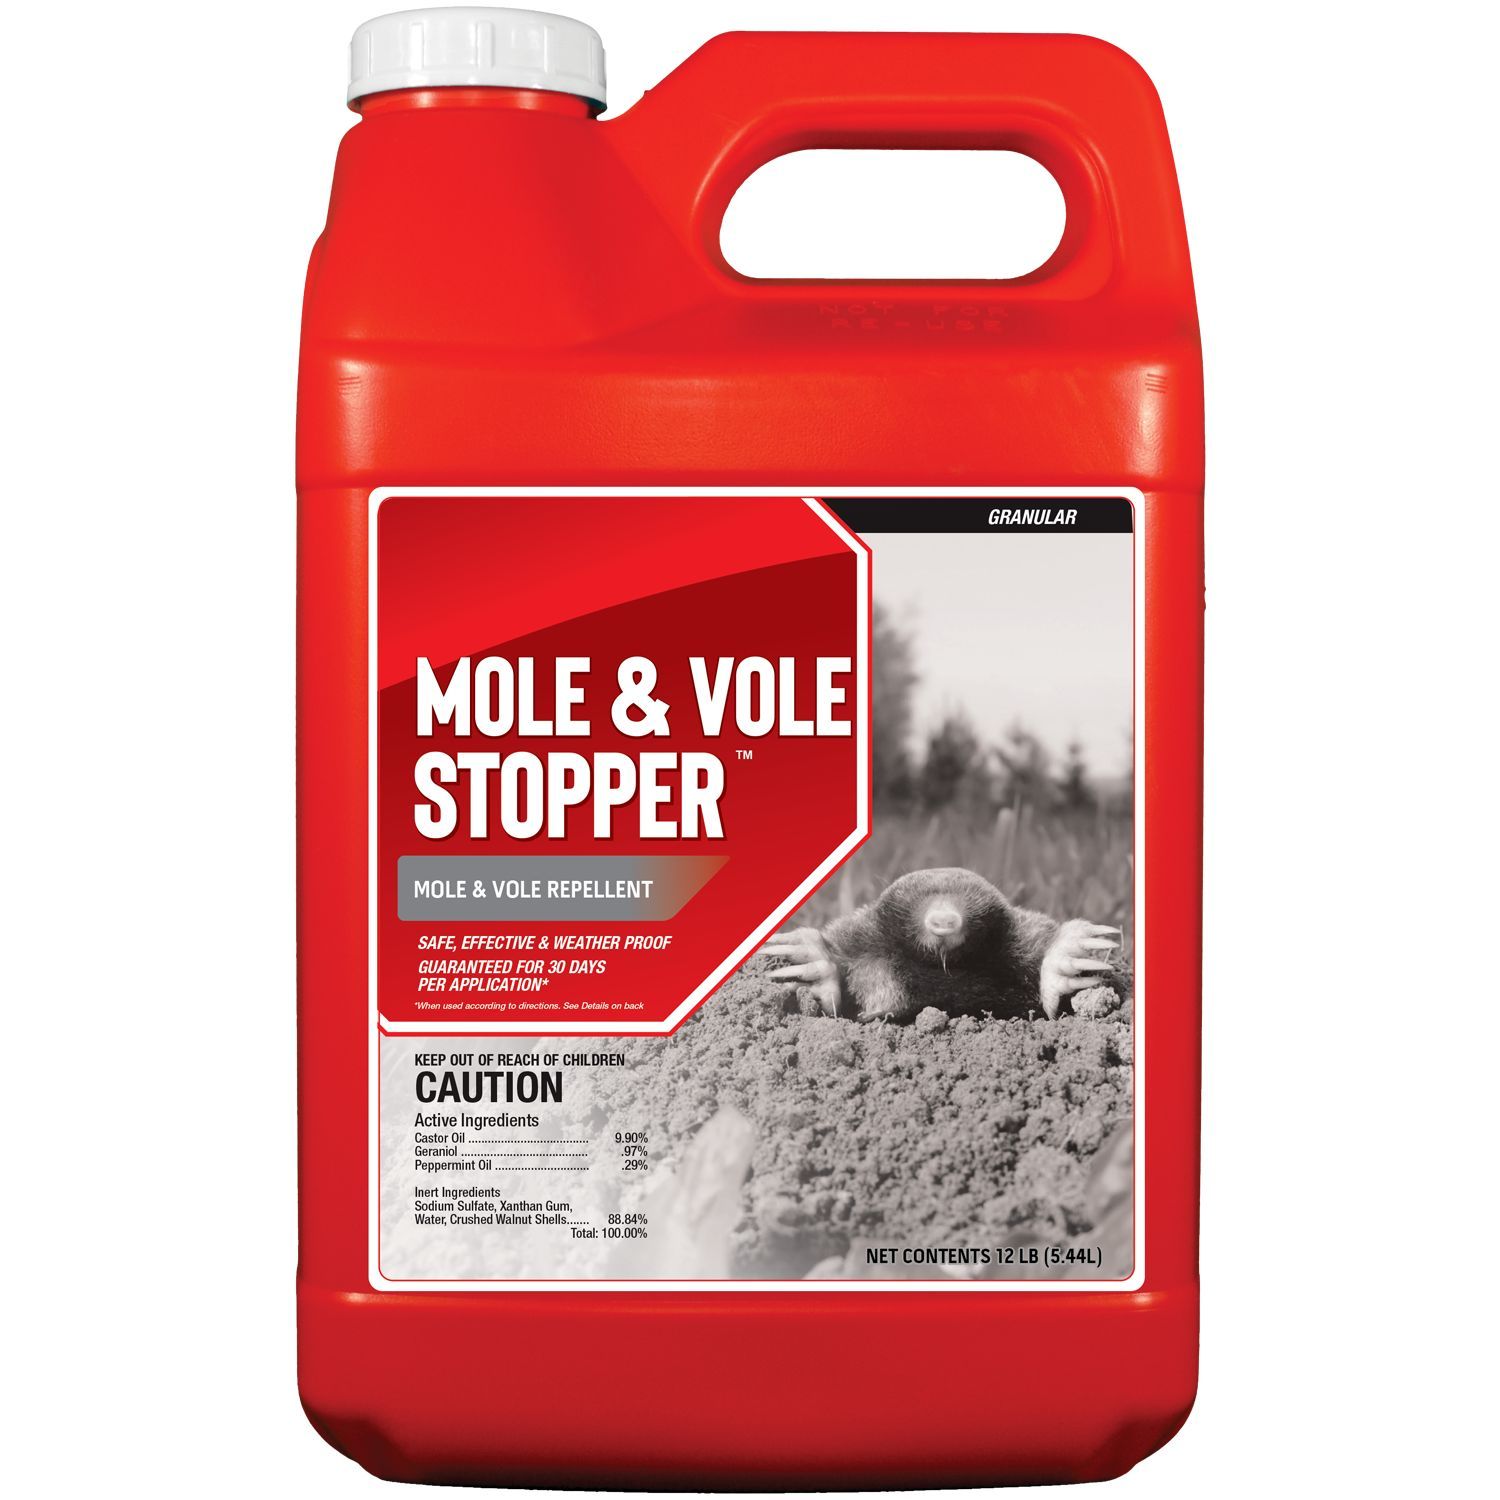 Tomcat Mole & Gopher Repellent Ready-to-Spray, 32 oz., Size: 32 fl oz